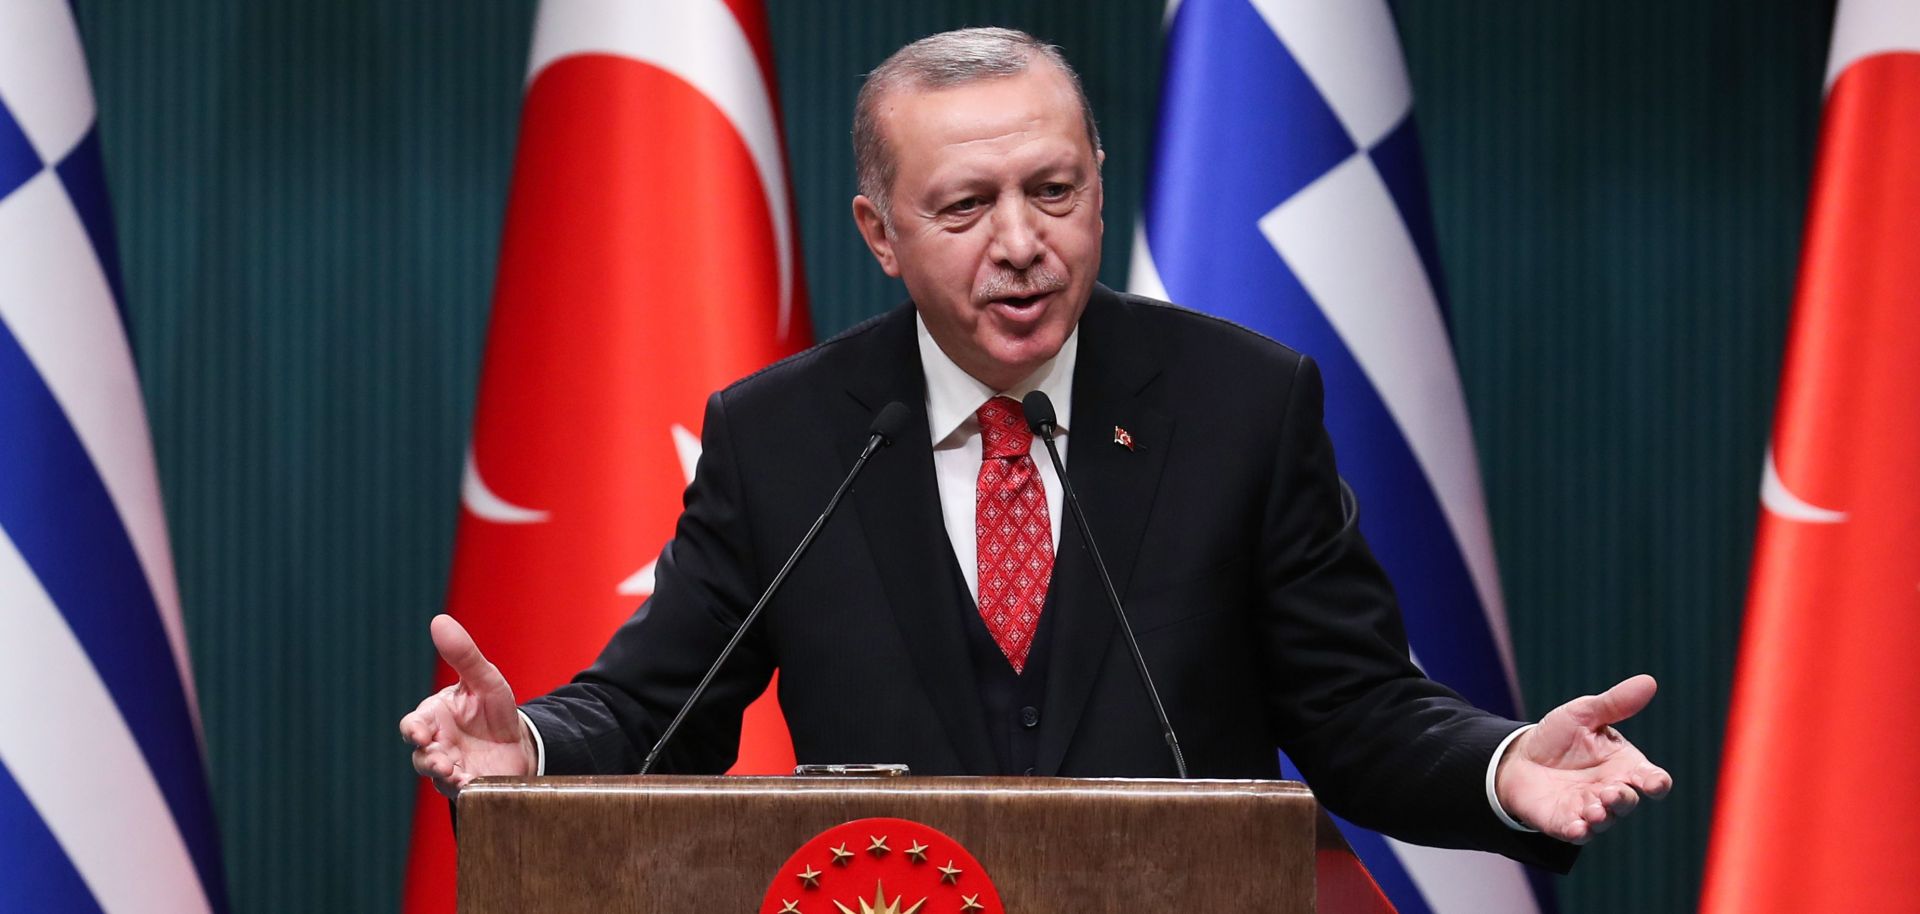 Turkish President Recep Tayyip Erdogan speaks during a news conference in Ankara on Feb. 5, 2019.